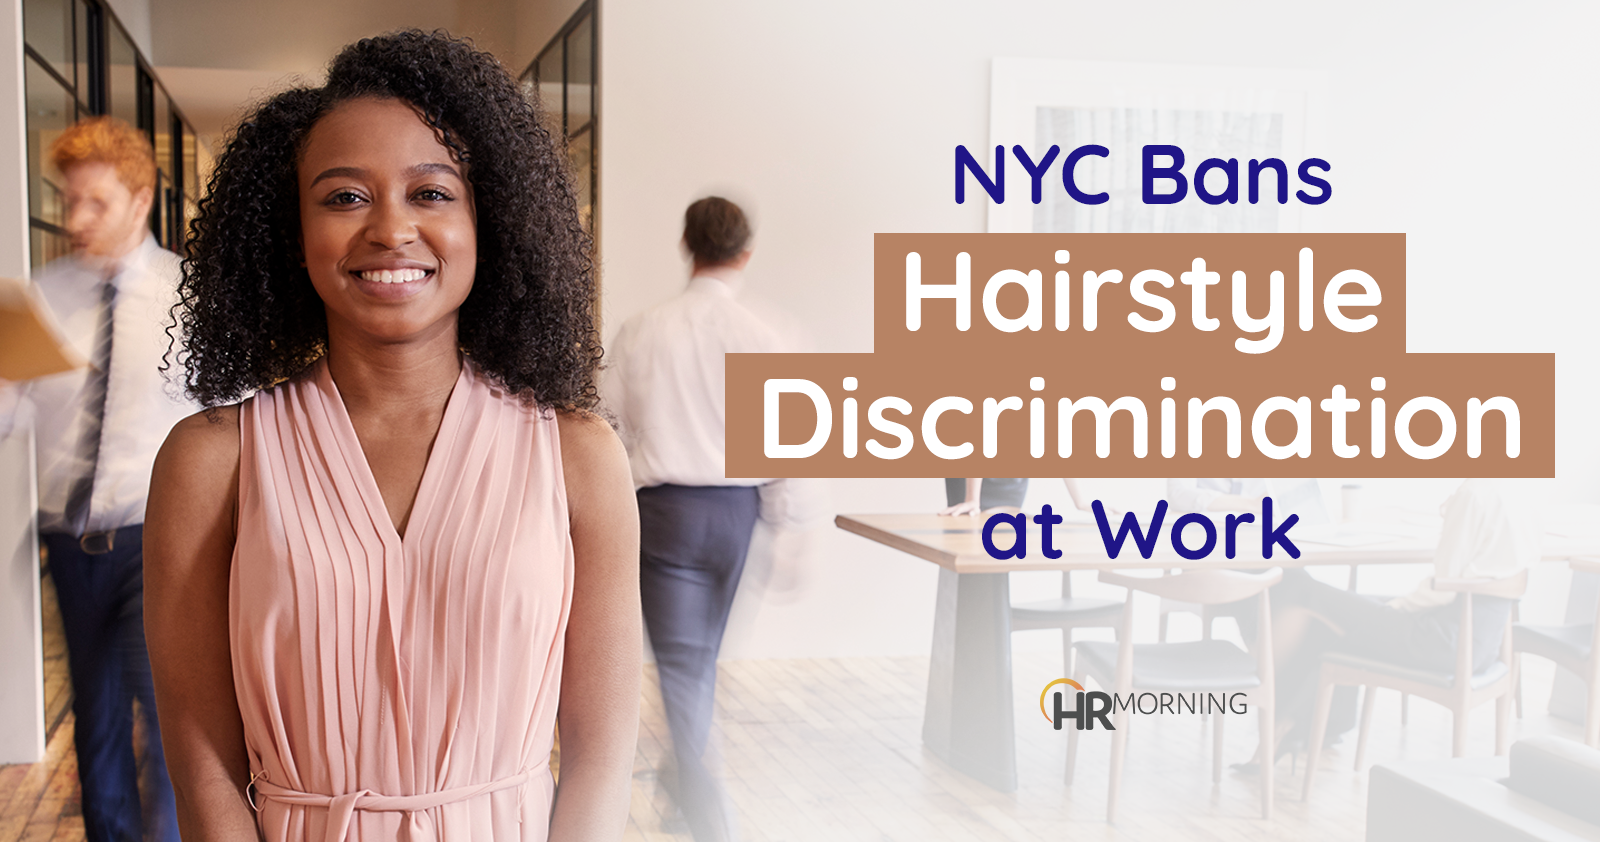 NYC bans hairstyle discrimination at work